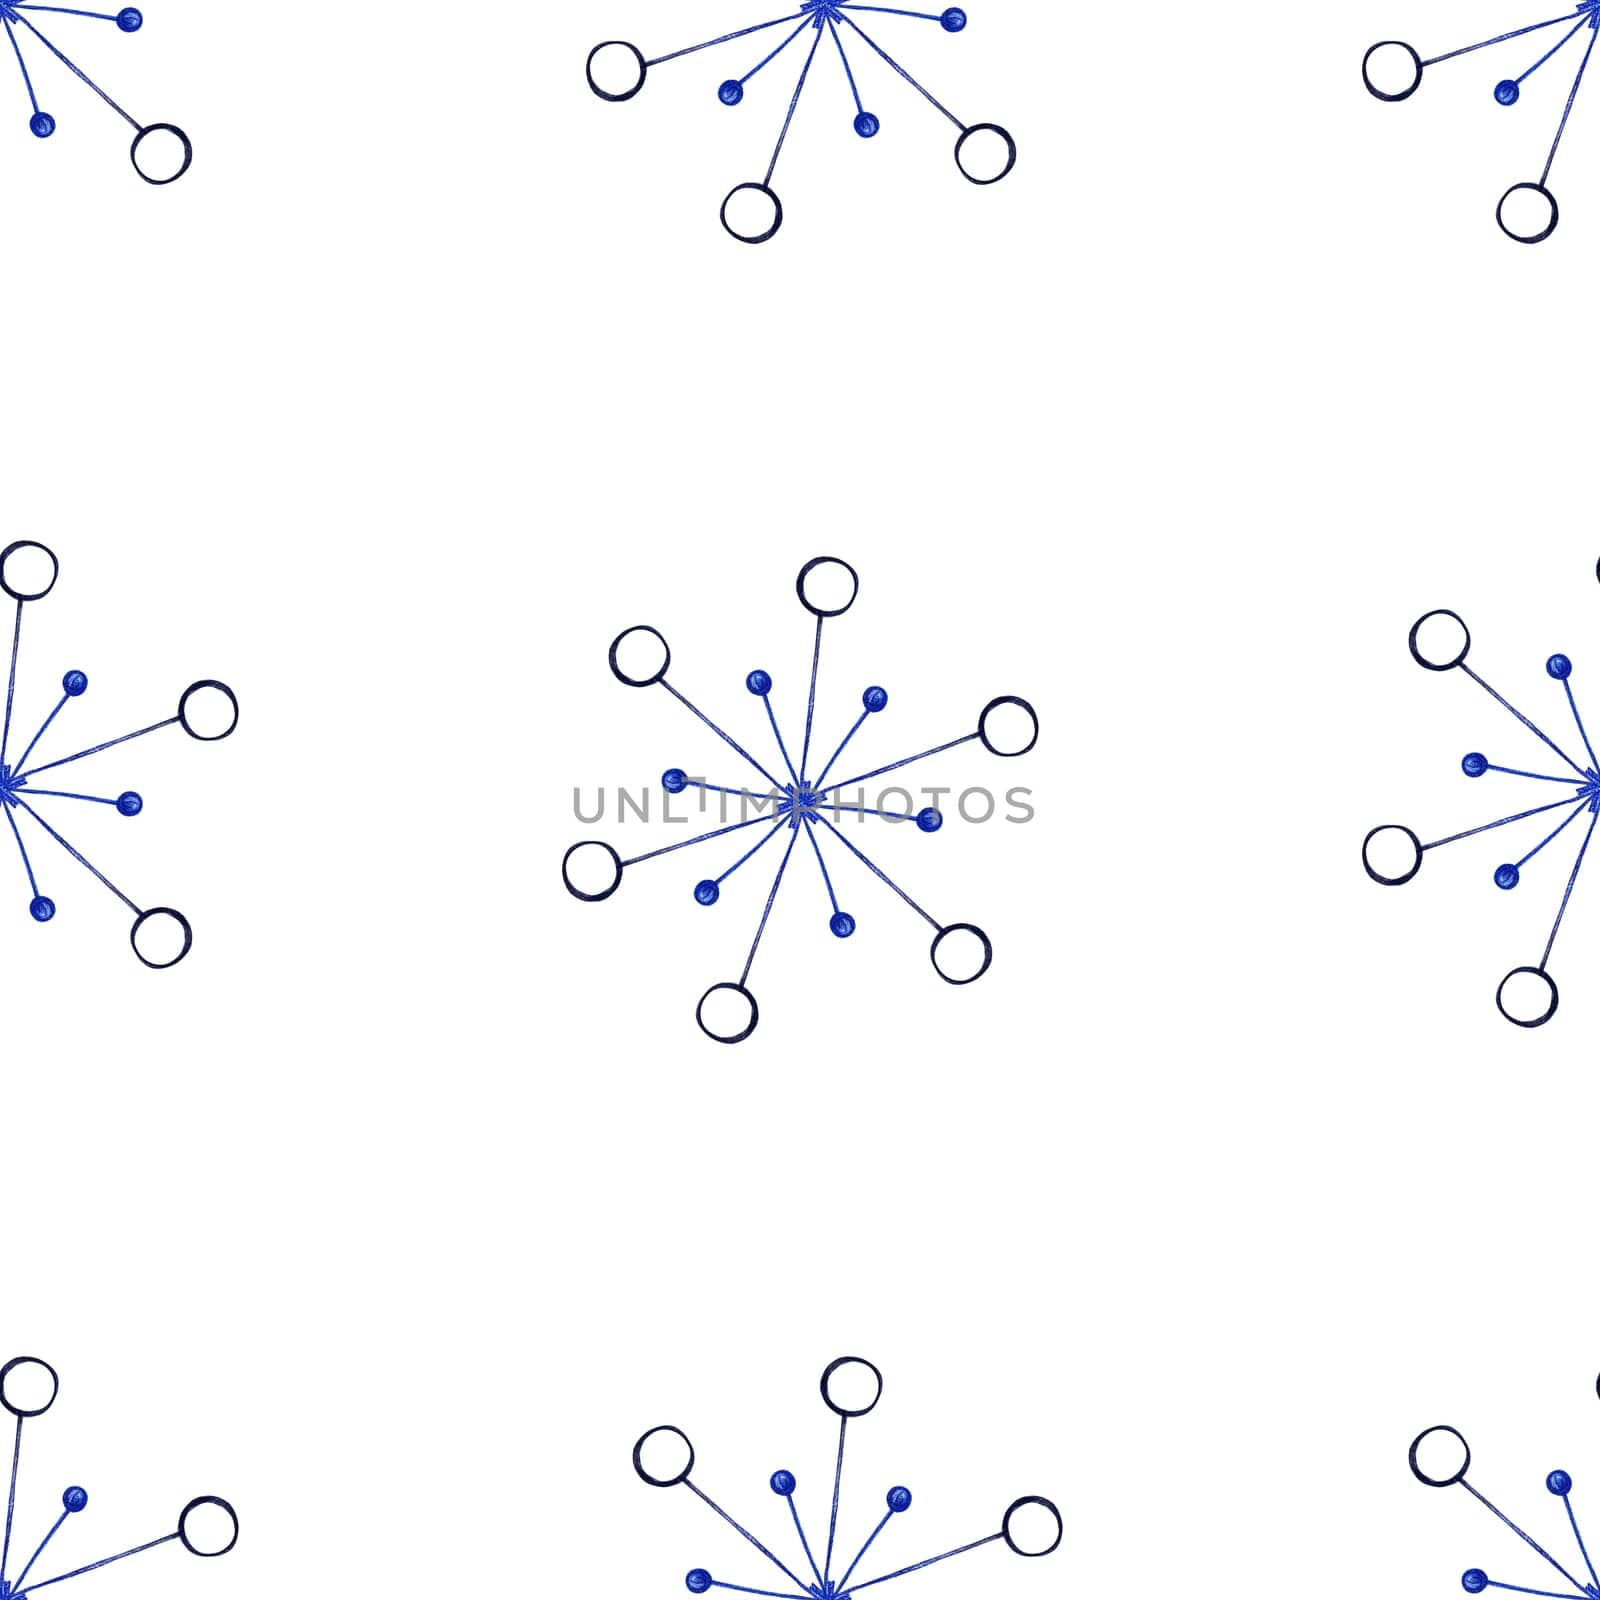 Simple Seamless Pattern with Hand Drawn Snowflakes. by Rina_Dozornaya